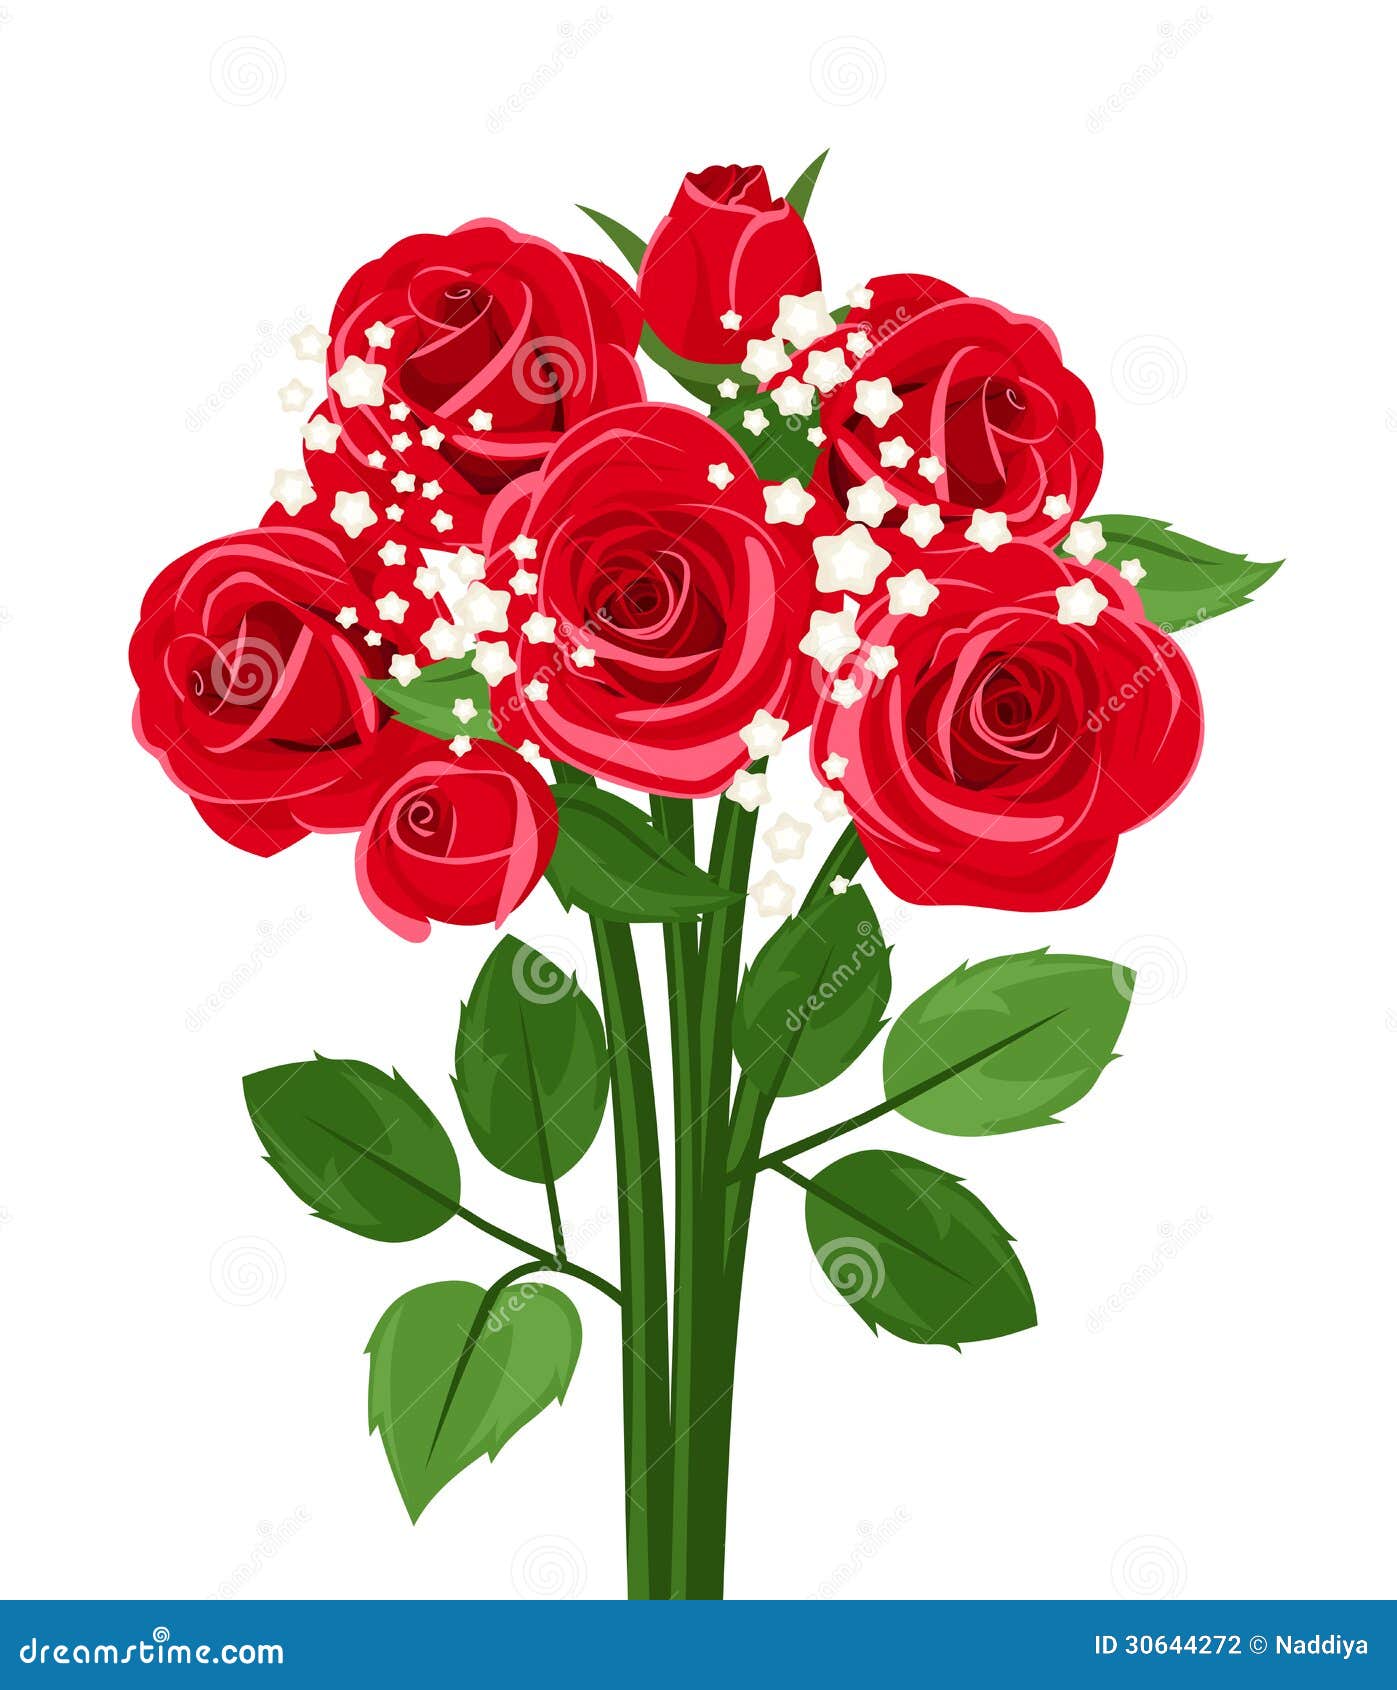 clipart rose rosse - photo #30